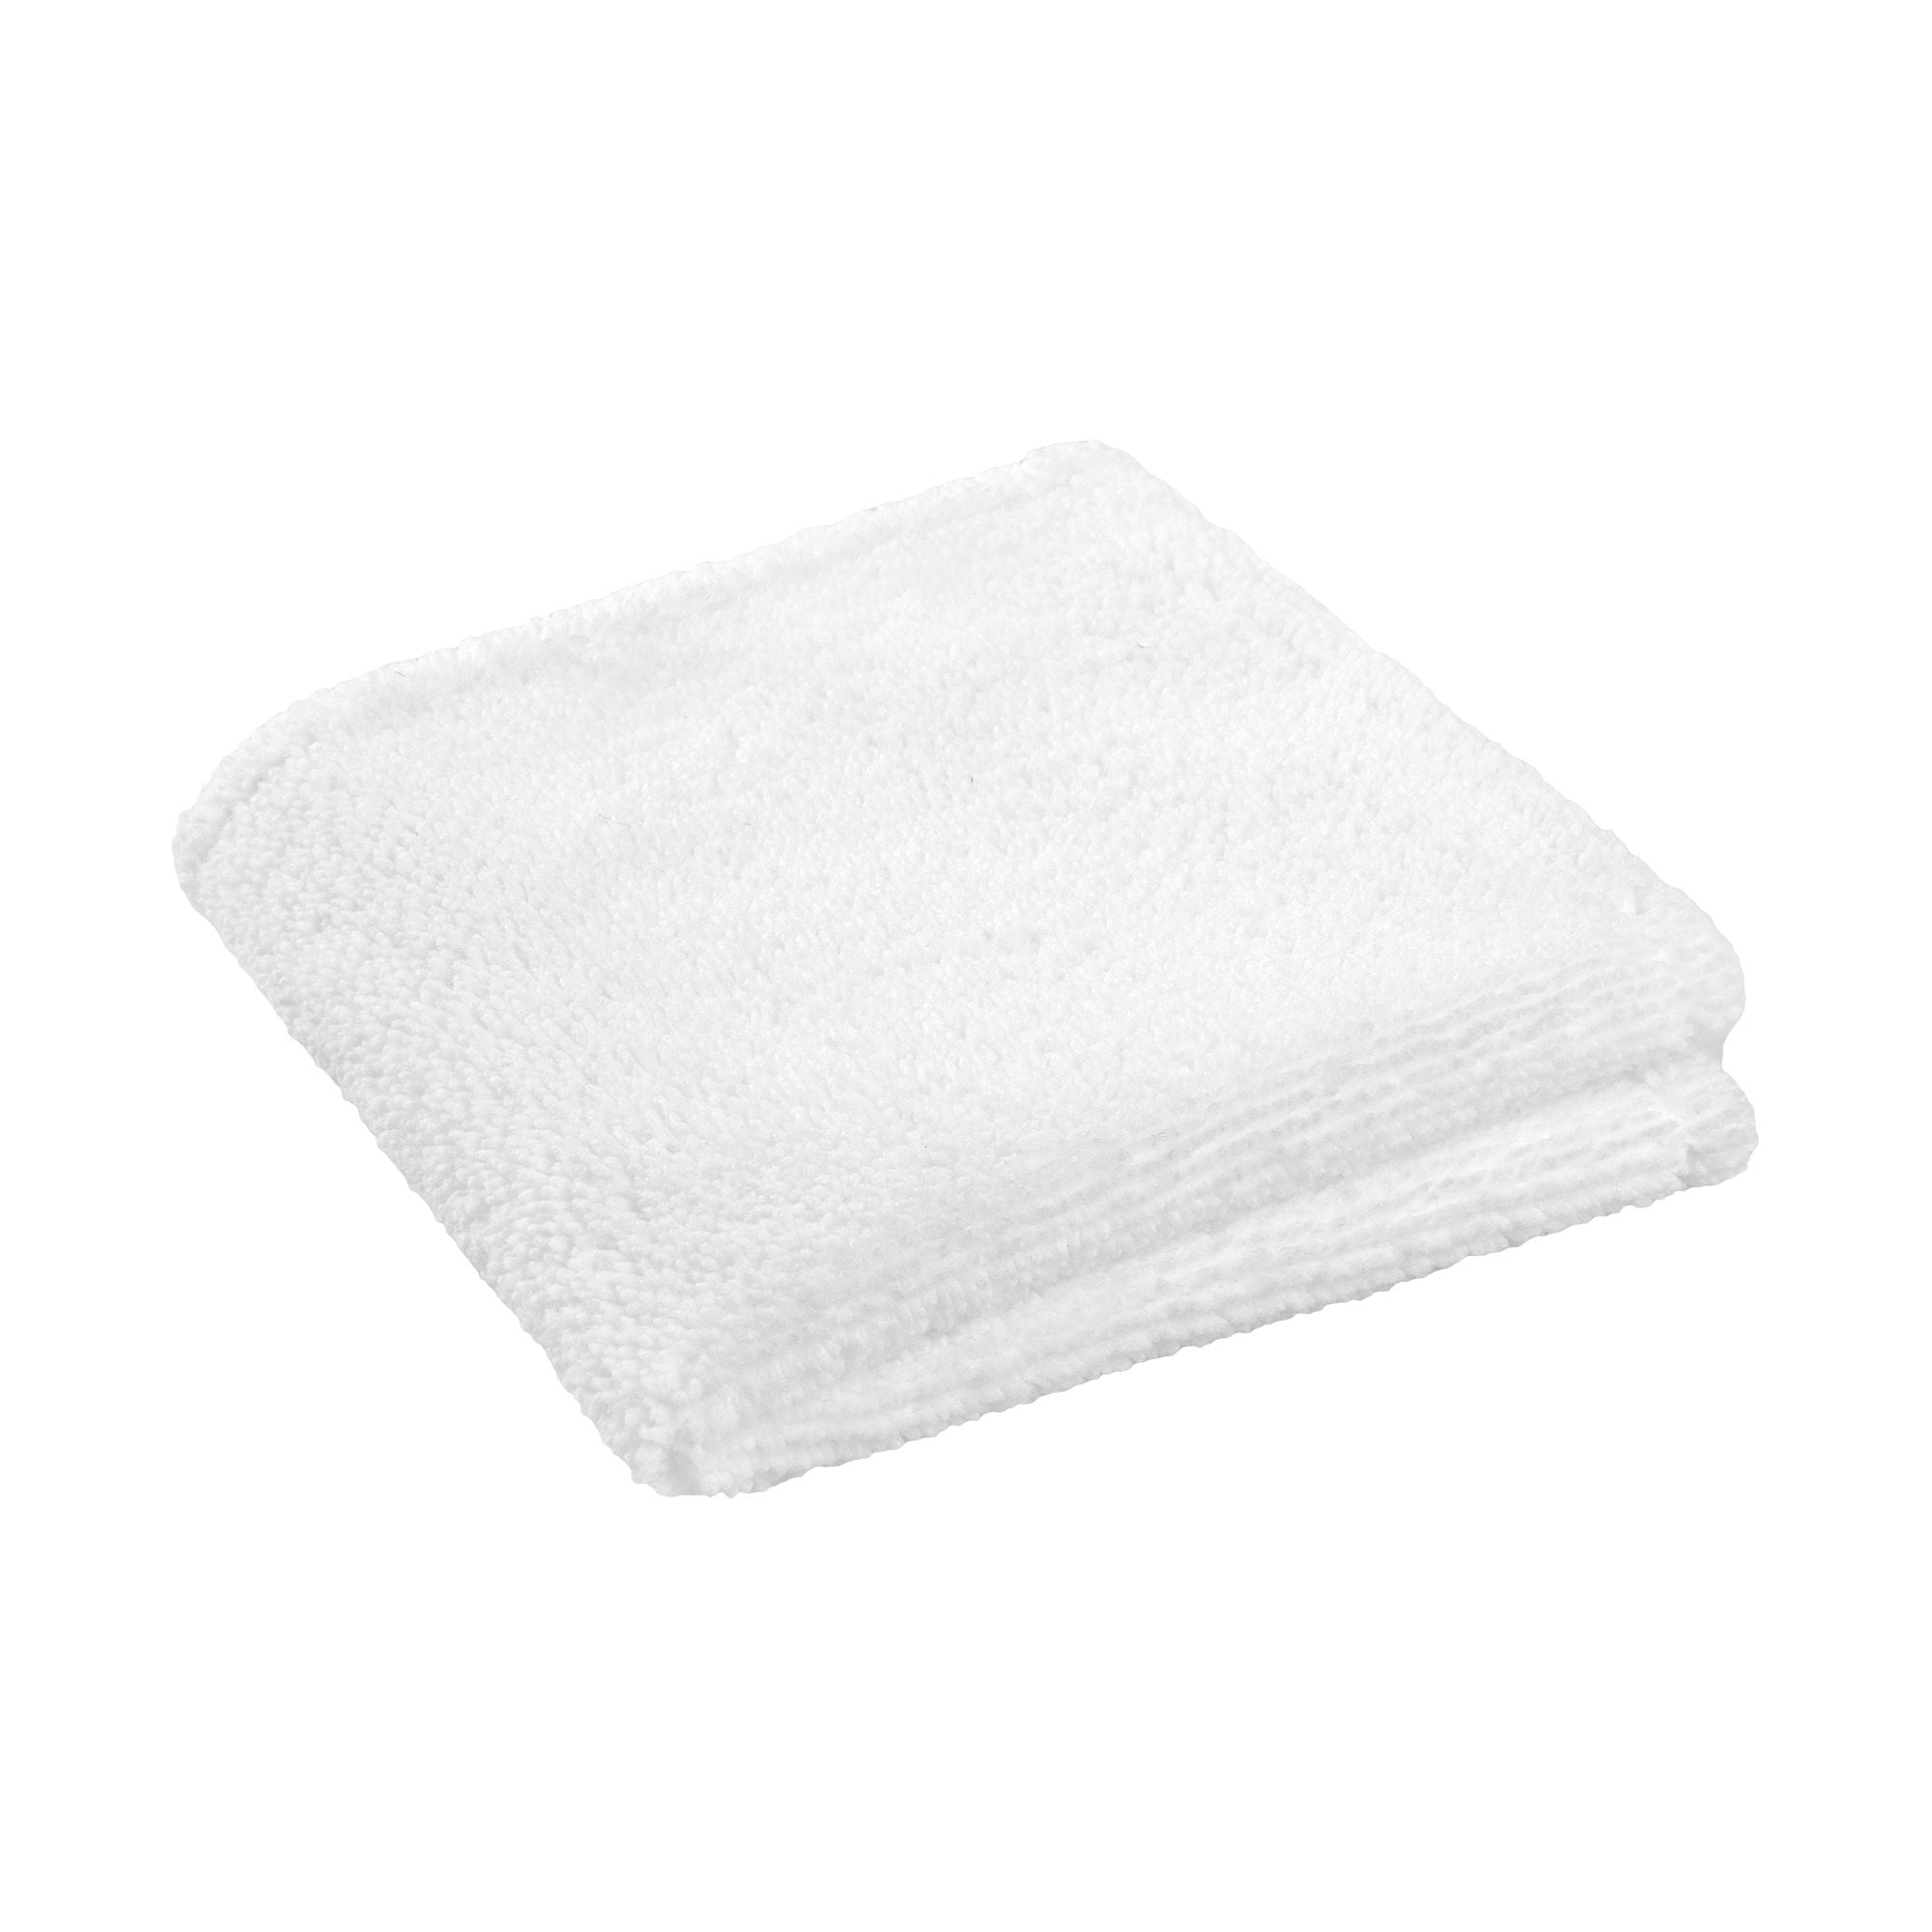 01. GLOV Luxury Face Towels set